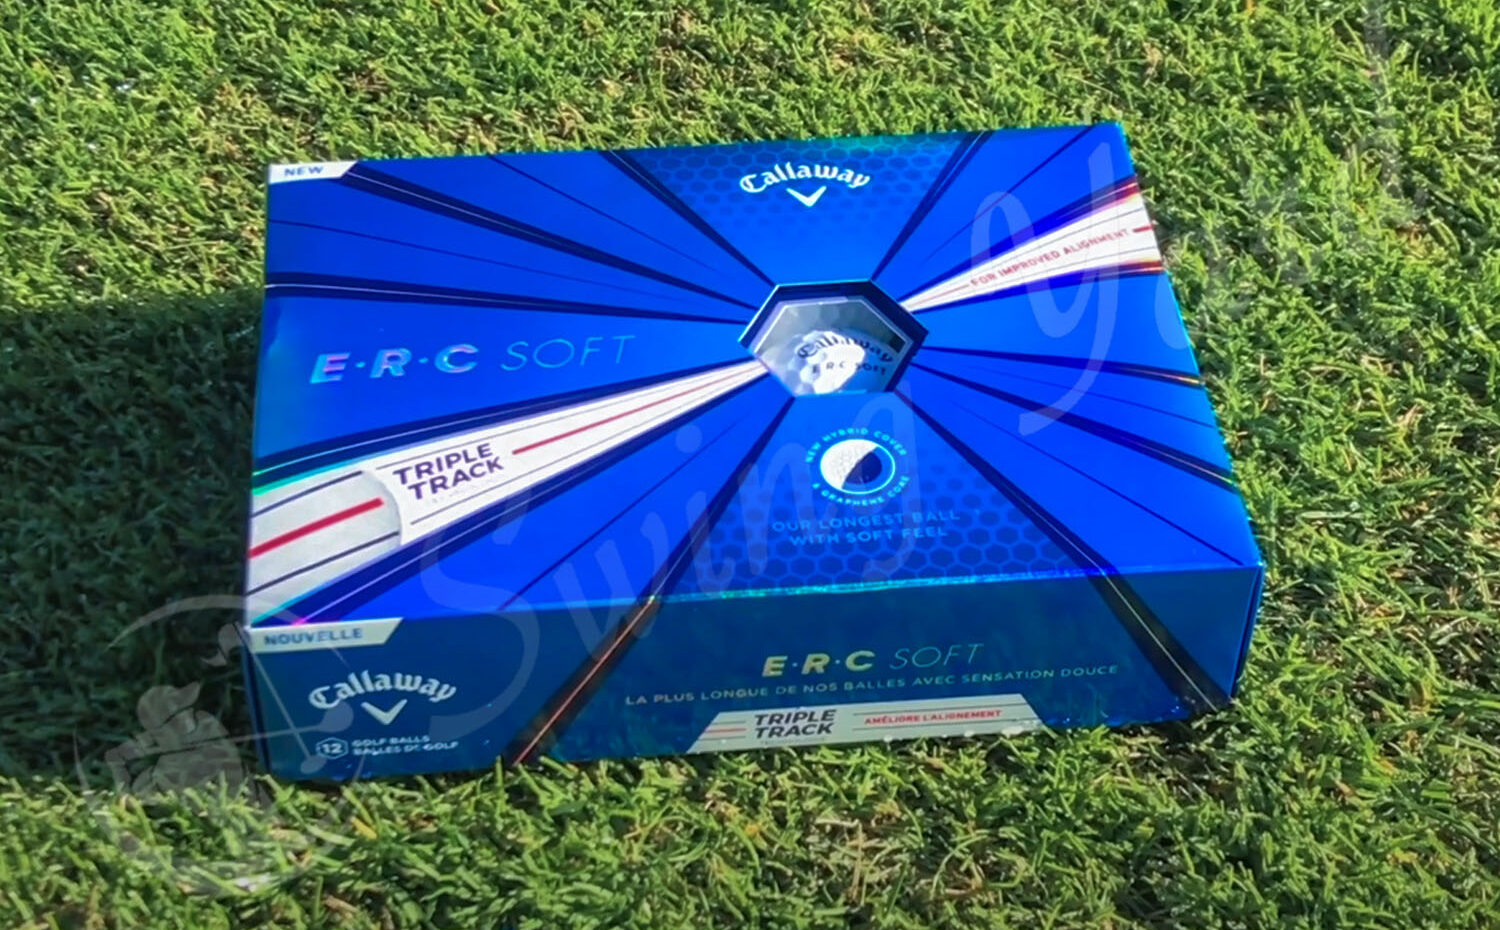 My new Callaway ERC Soft box in the grass